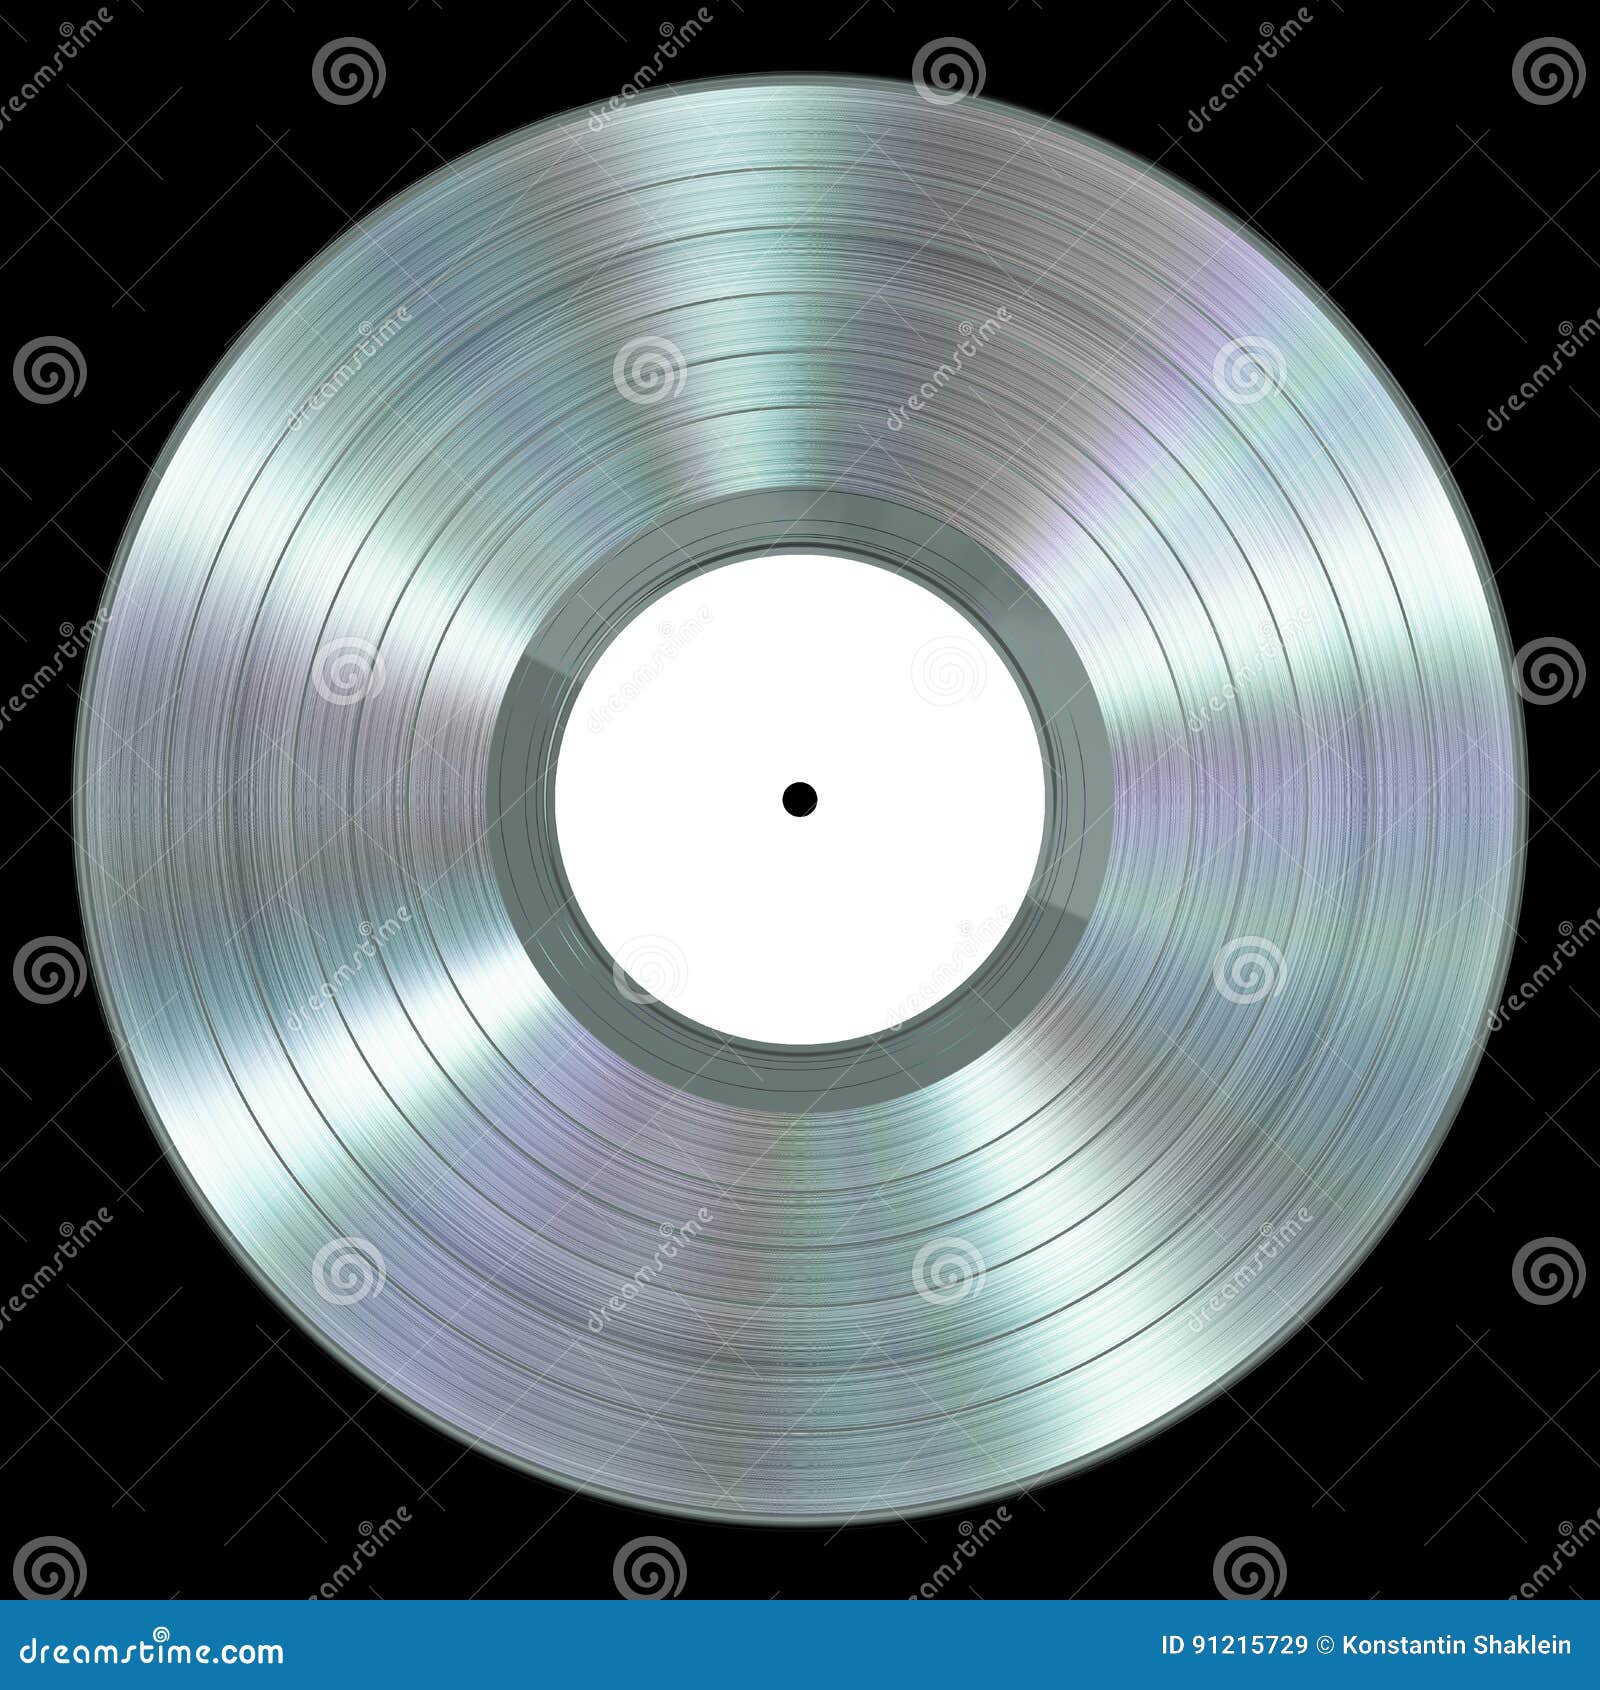 realistic platinum vinyl record on black background